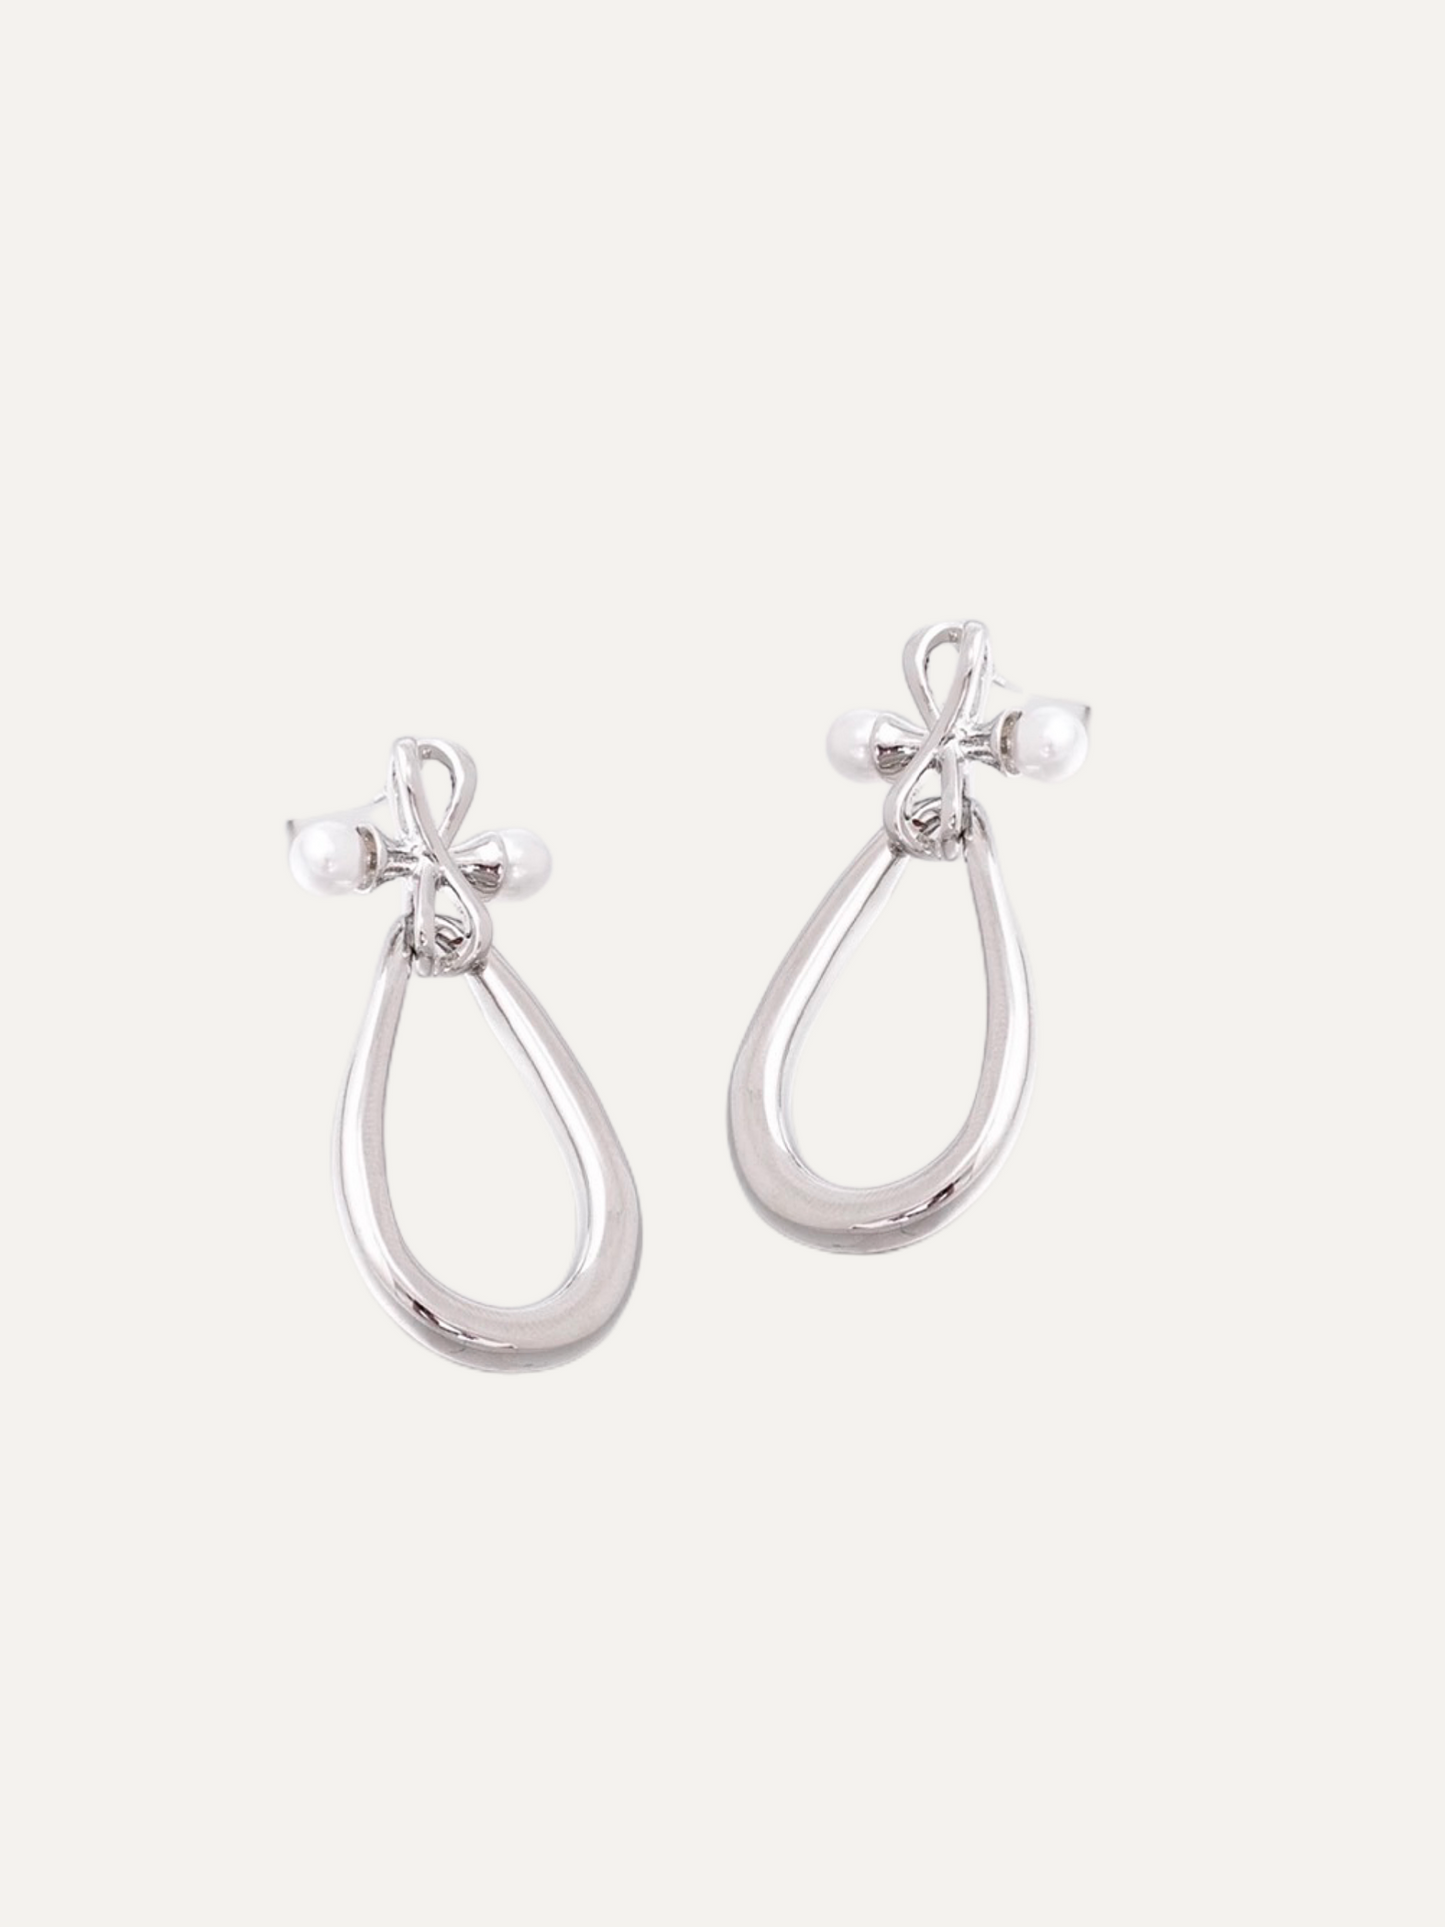 Cross Series Pearl Double Layered Silver Earrings for Women